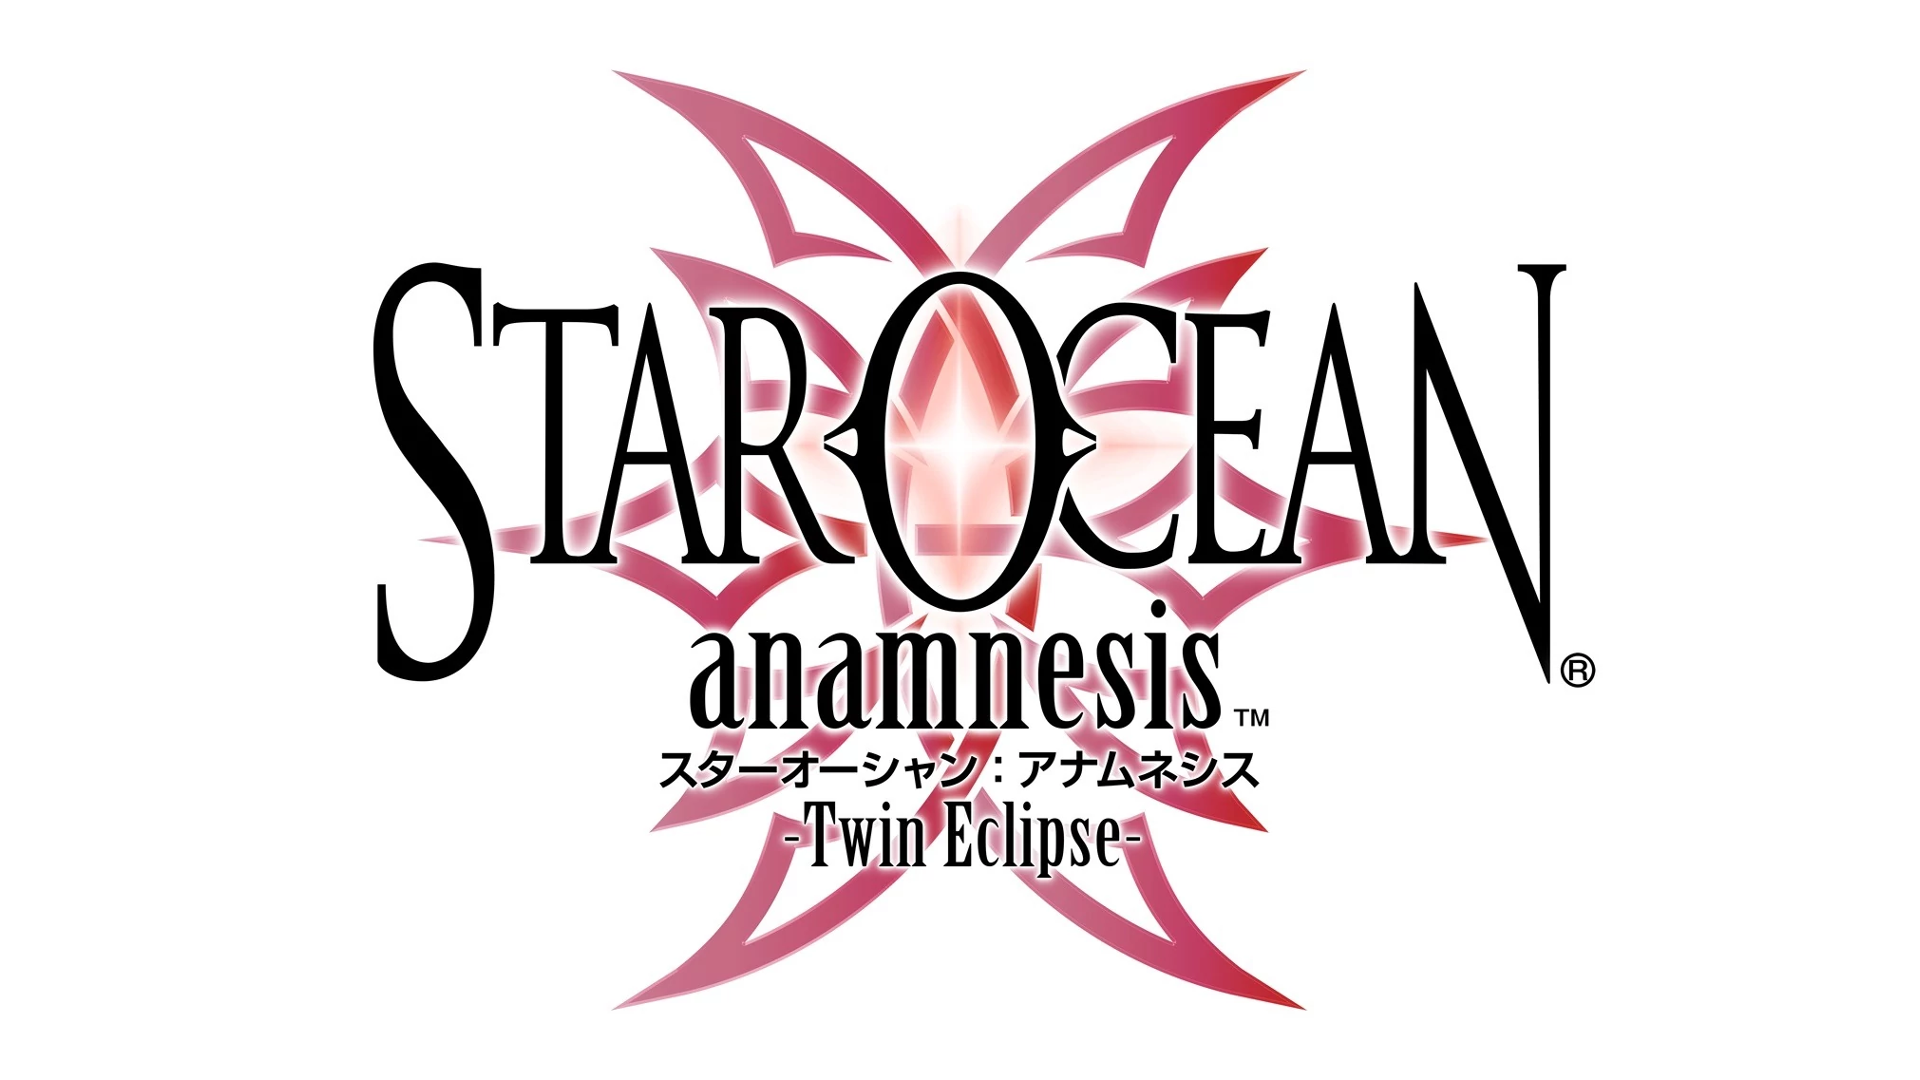 Star Ocean: anamnesis Logo